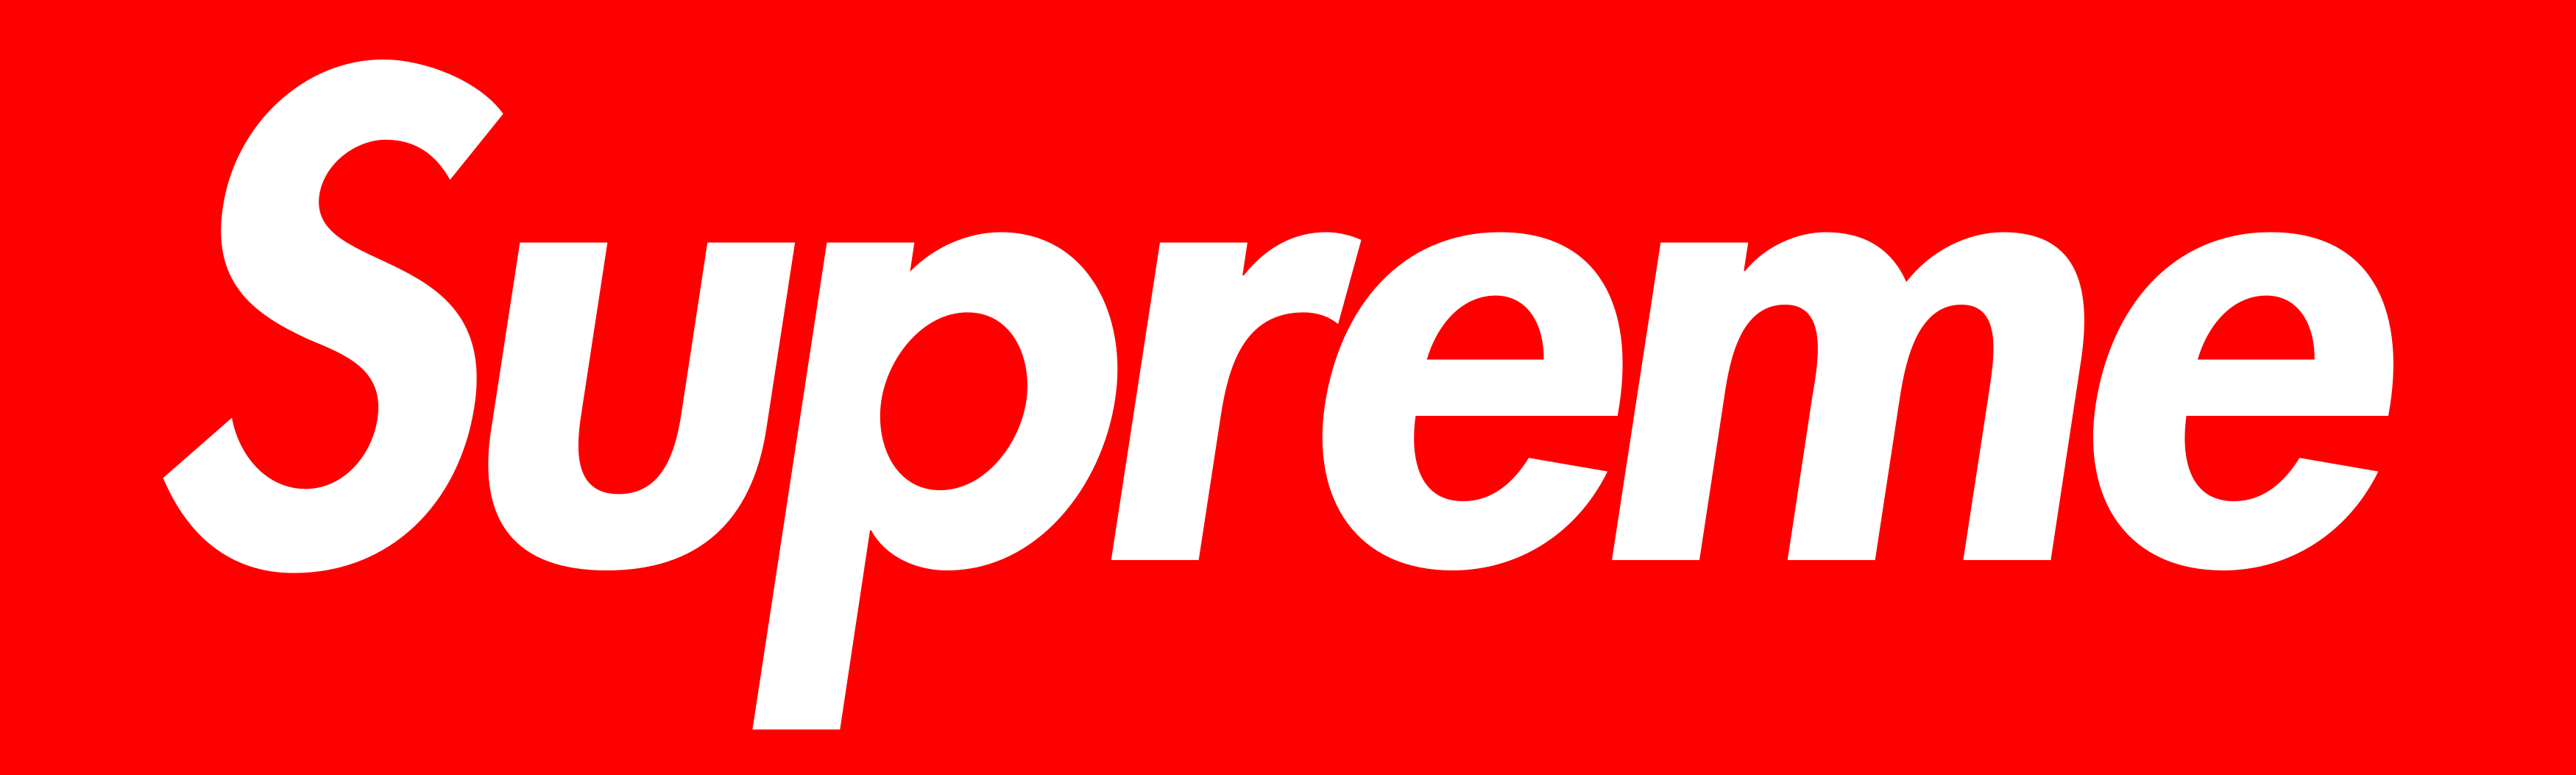 supreme logo - Supreme Logo